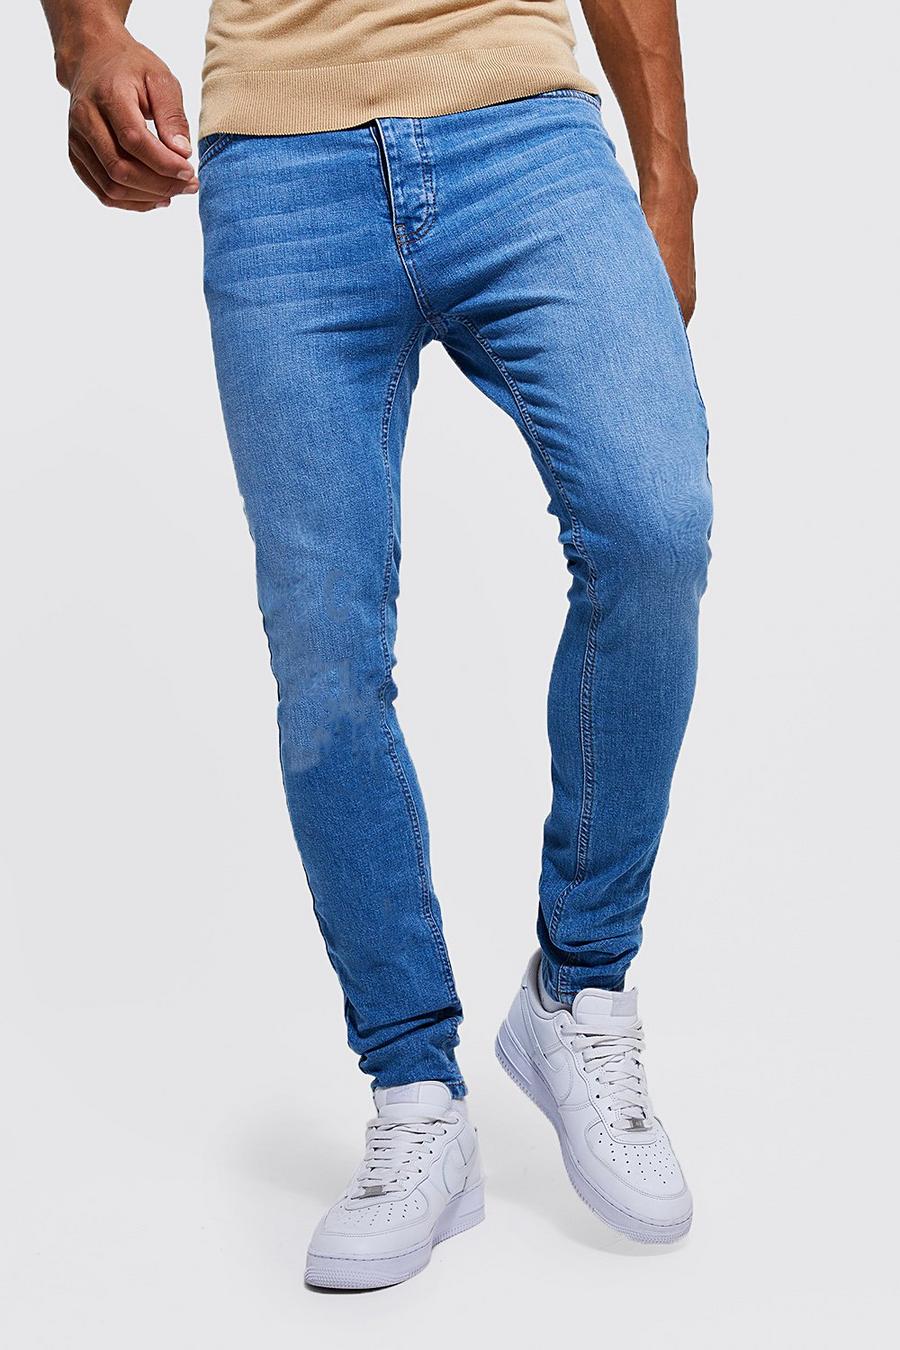 Indigo blue Tall Skinny Jeans